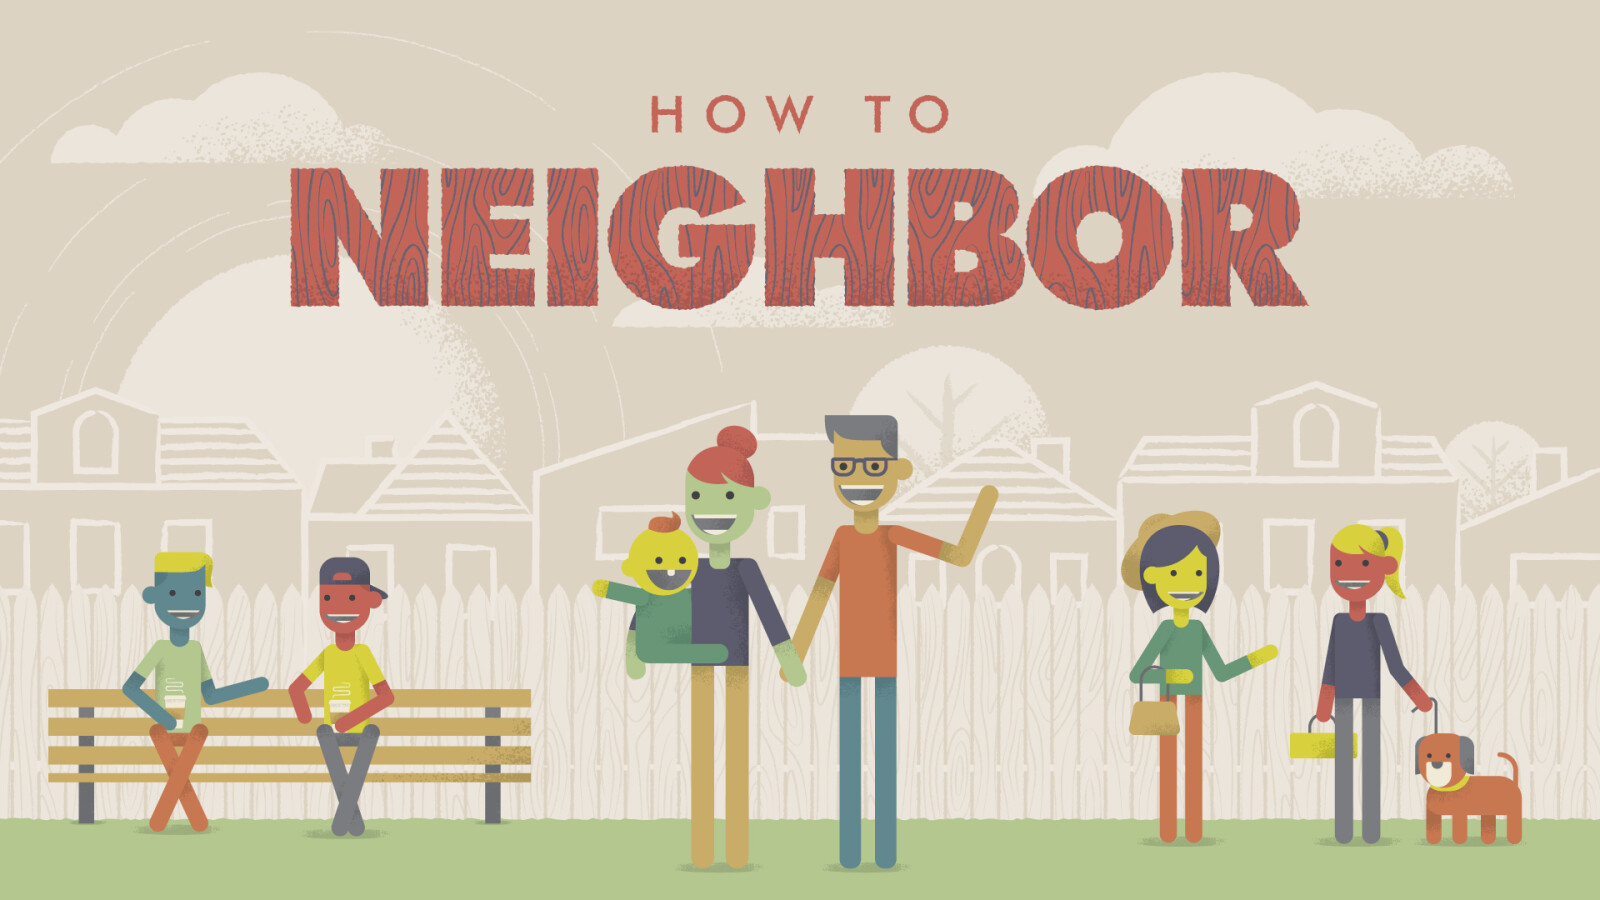 How To Neighbor